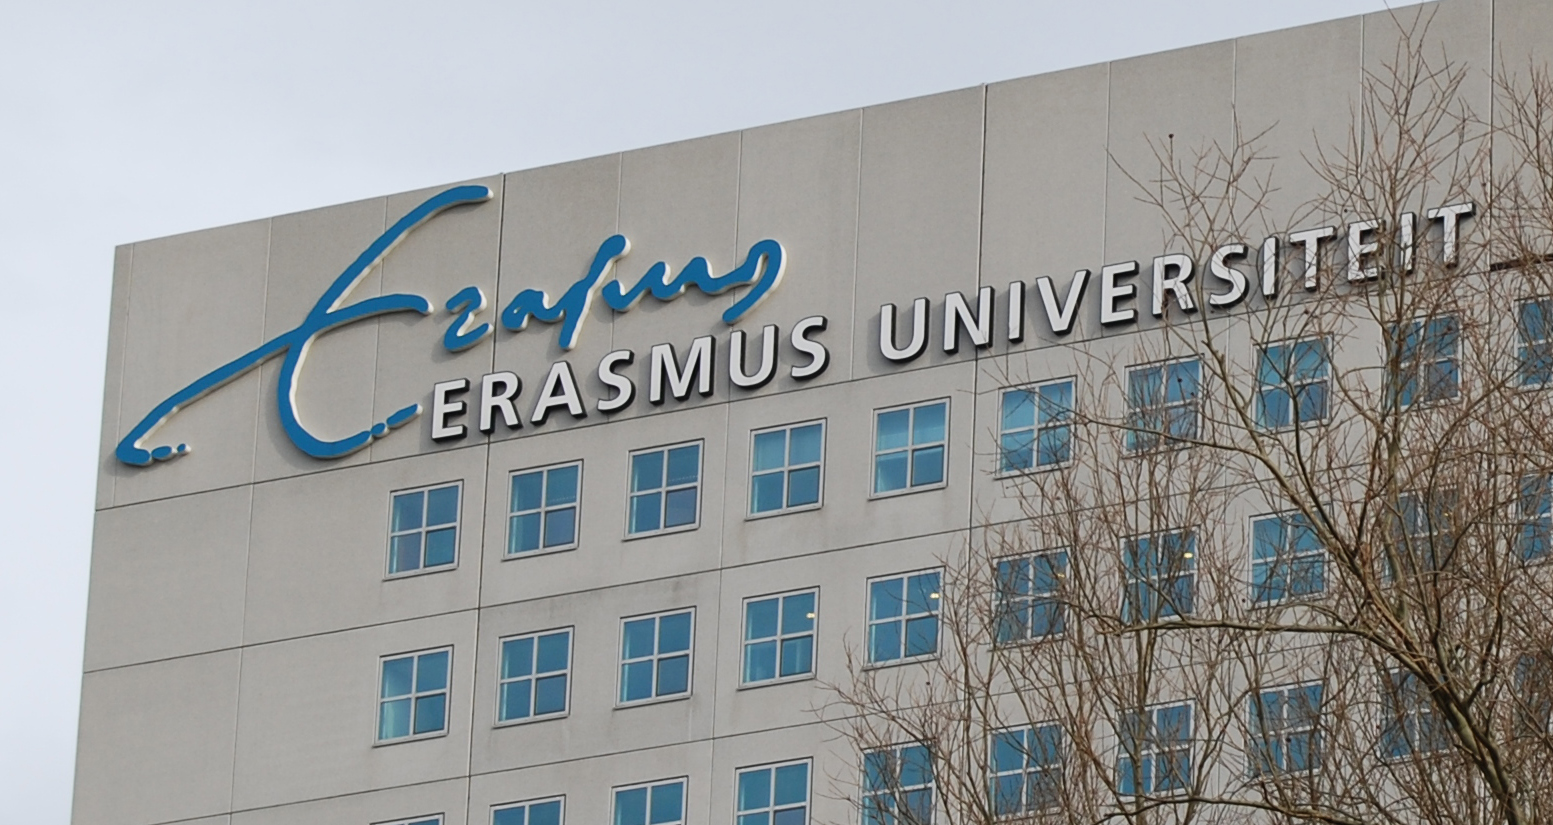  Erasmus University